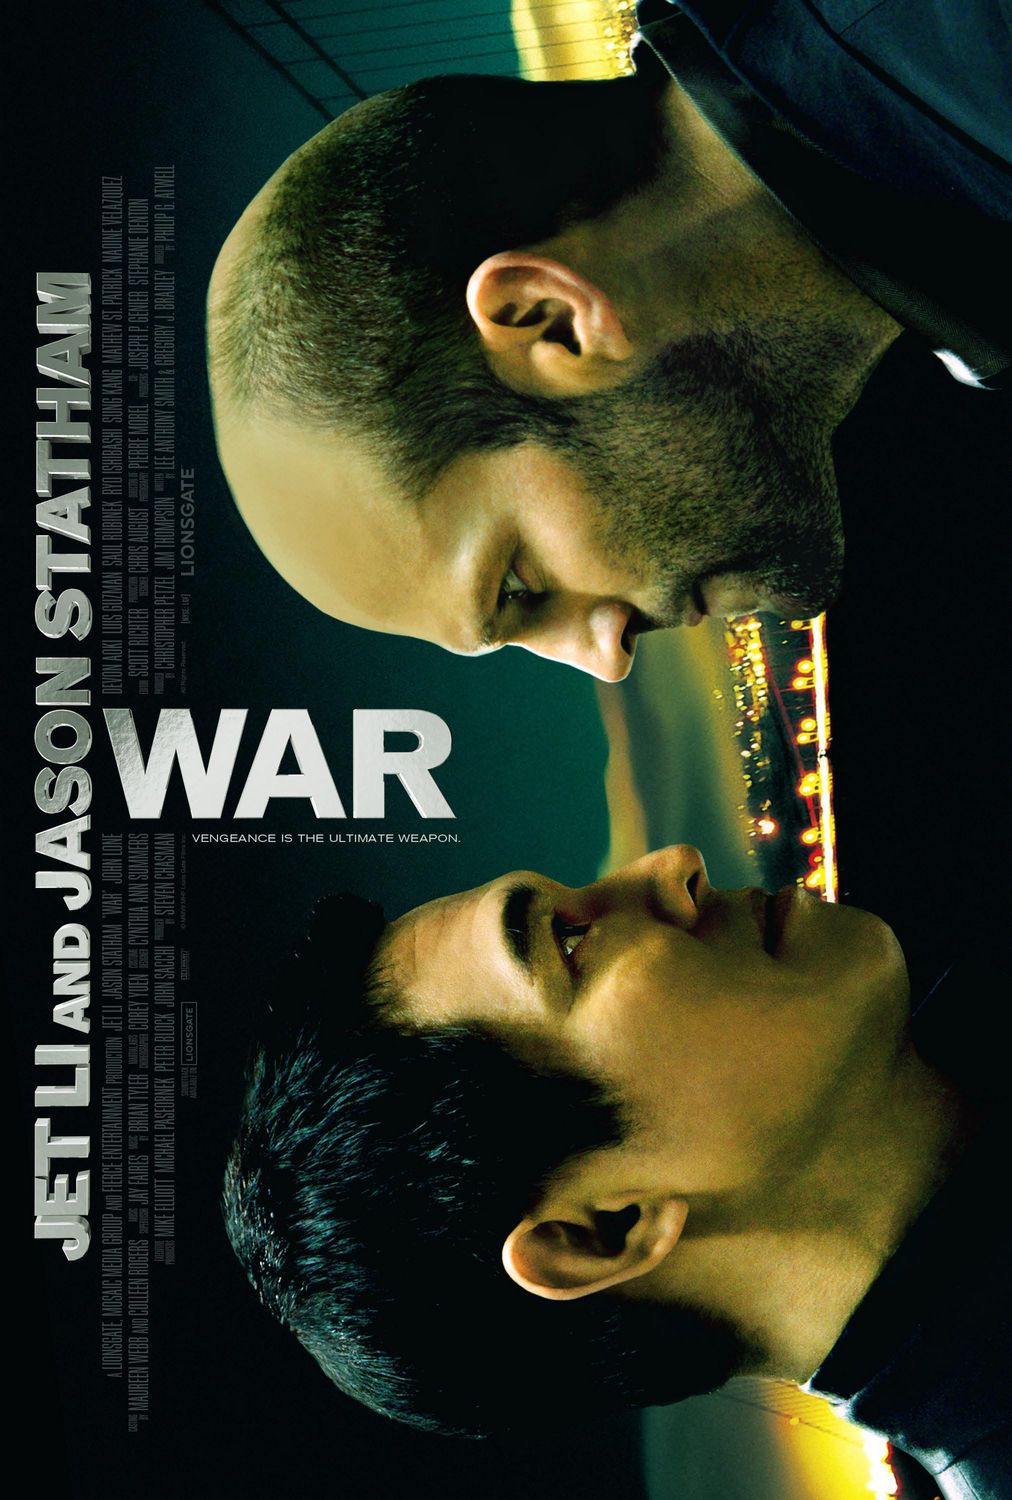 Постер - Война: 1012x1500 / 233 Кб